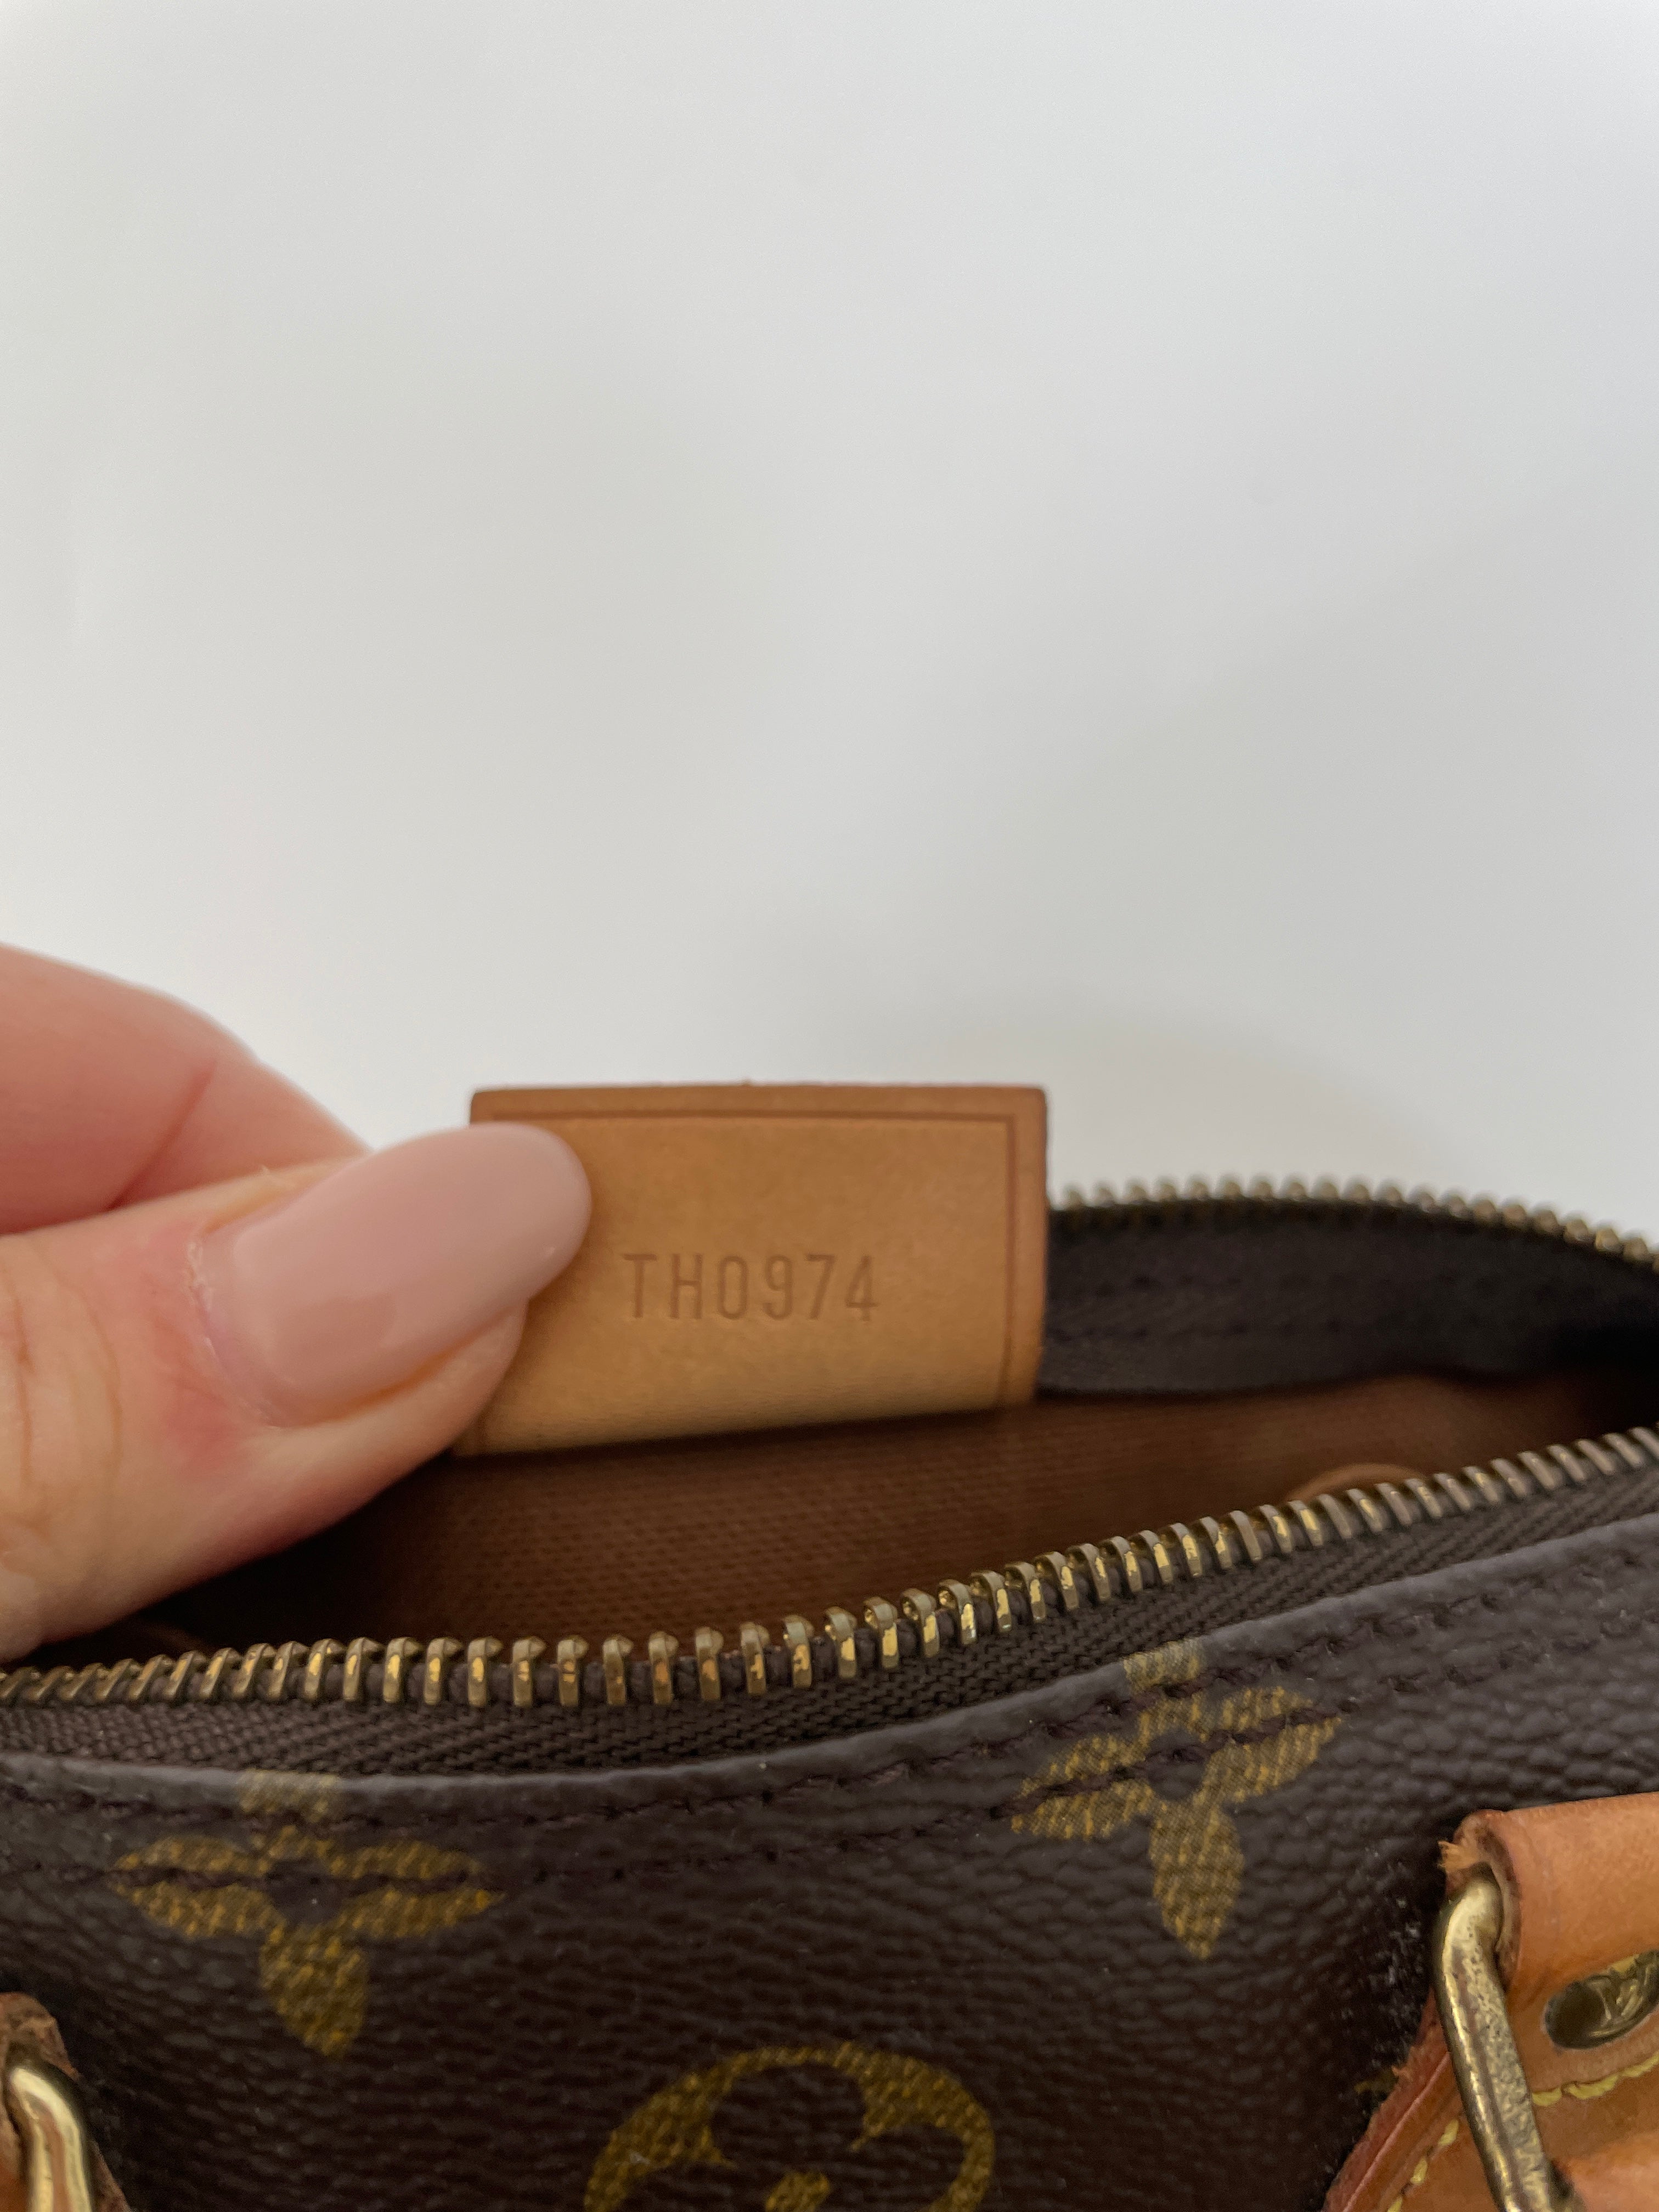 Louis Vuitton Mini Speedy Handbag Used (7121)